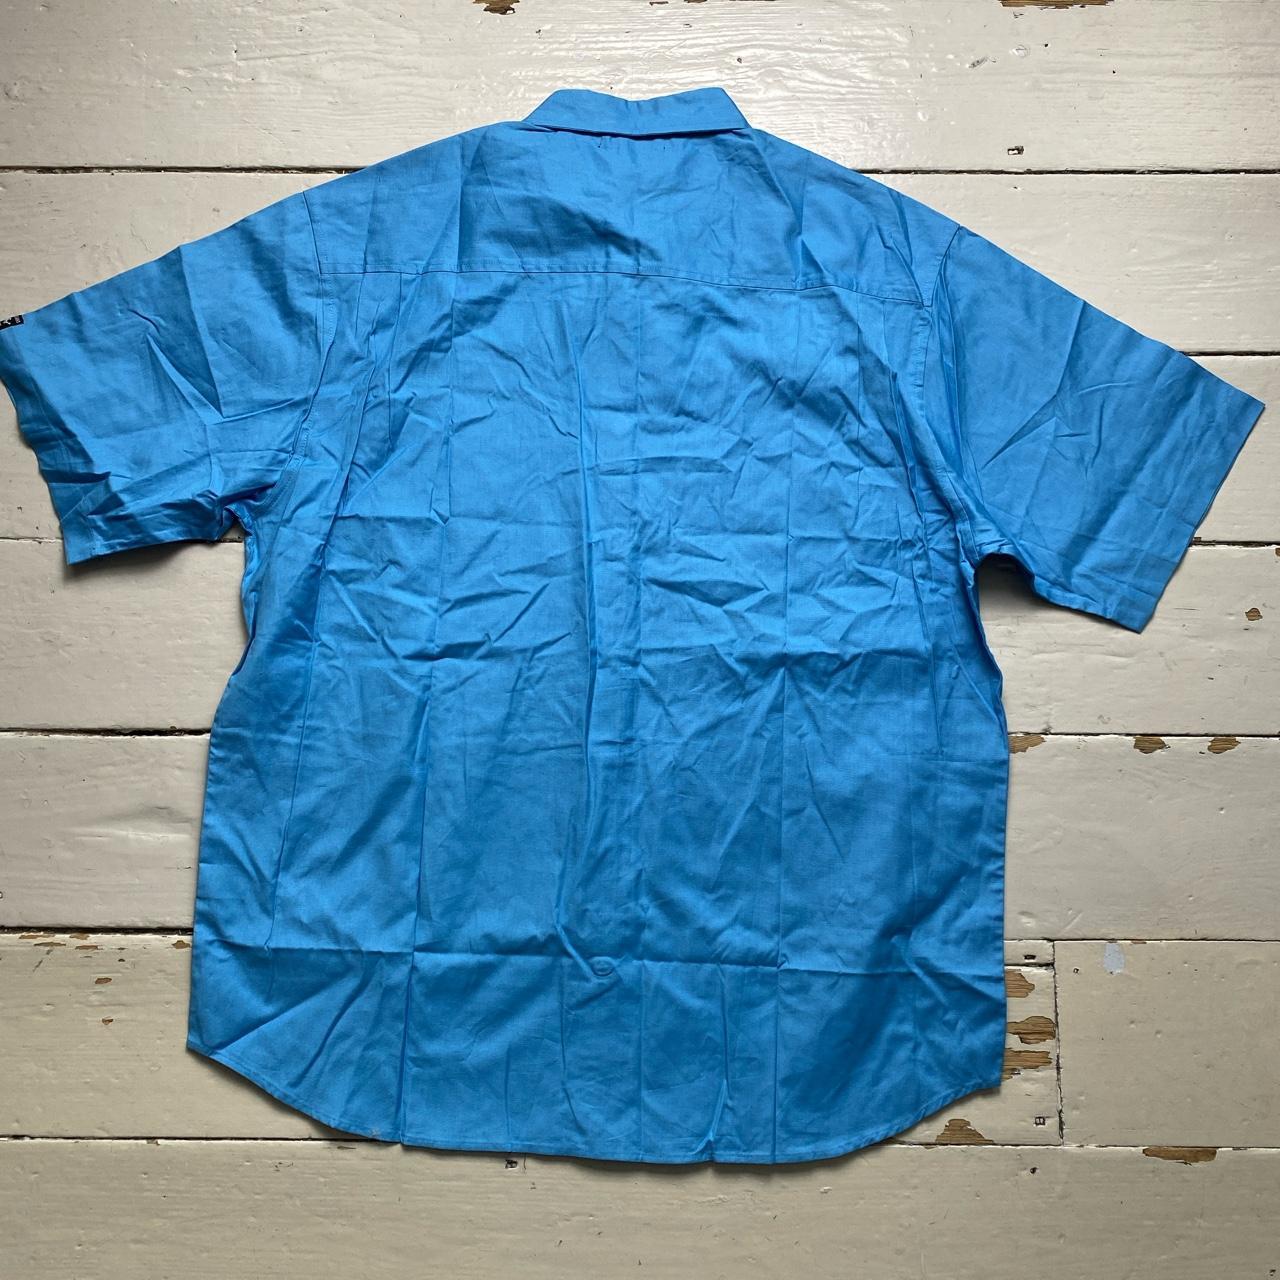 JNCO Jean Vintage Light Blue Short Sleeve Shirt